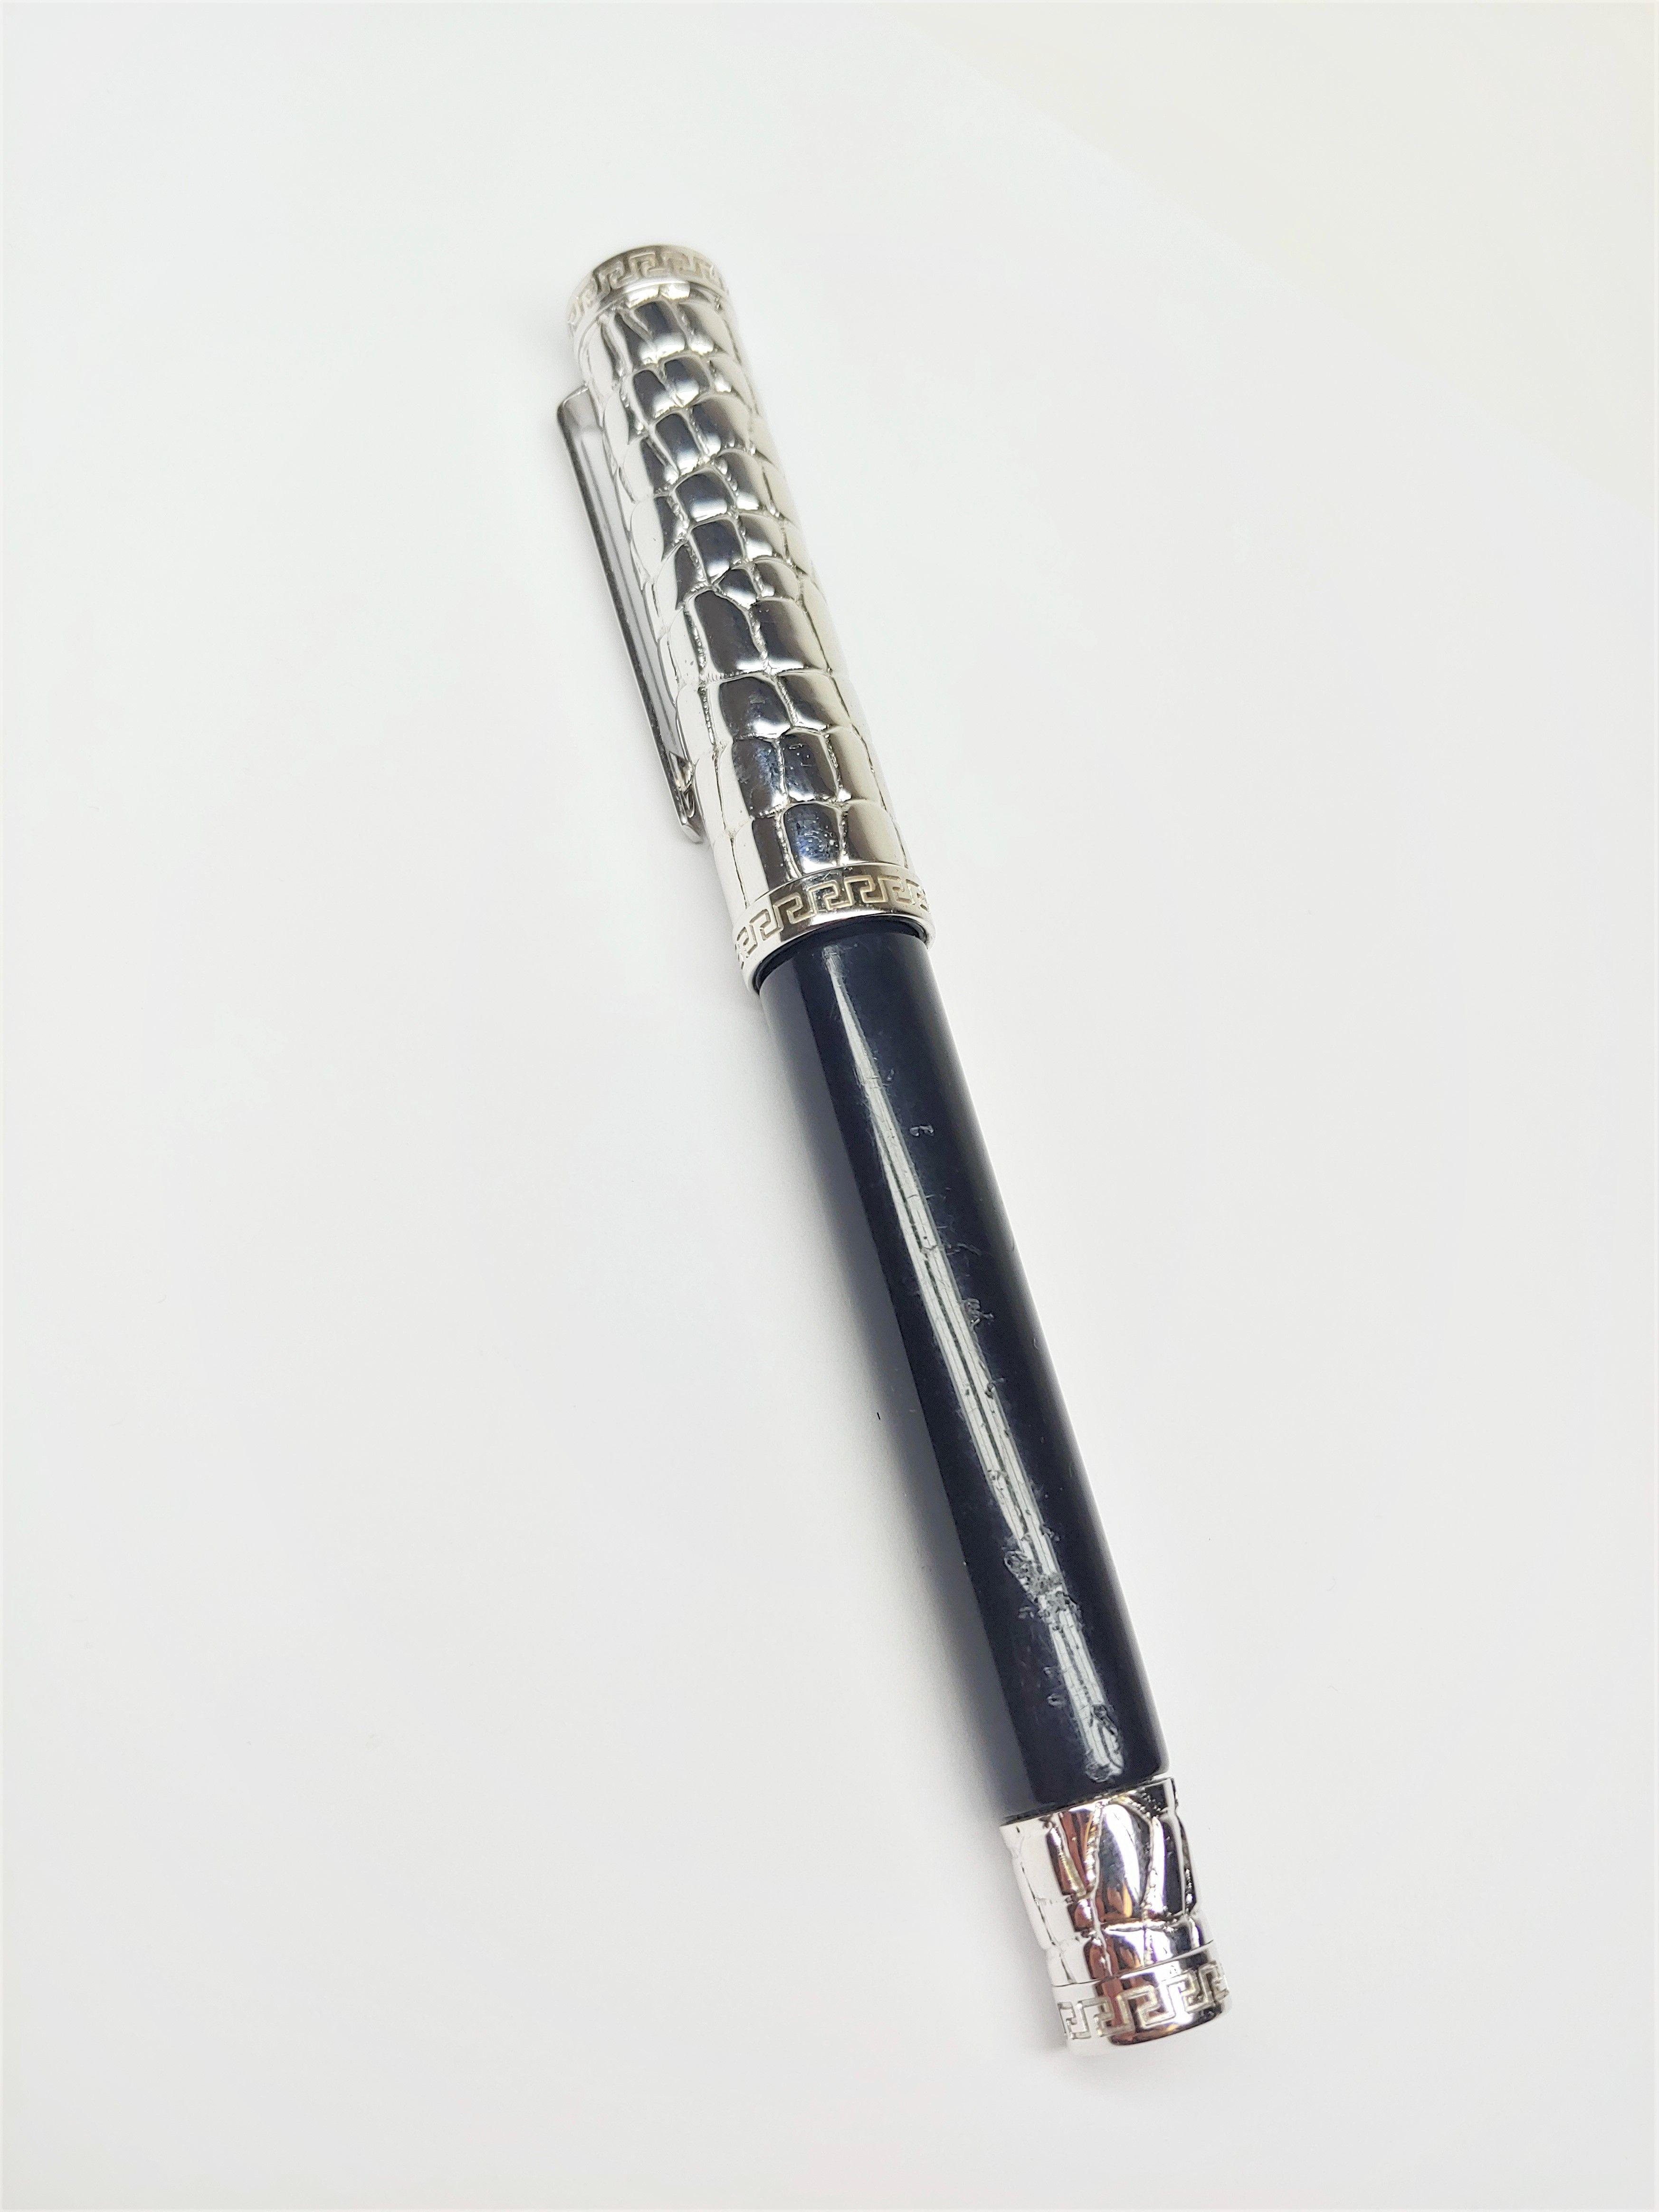 Designer Gianni Versace Black Resin Barrel w/ Silver Croco Cap Ink Pen